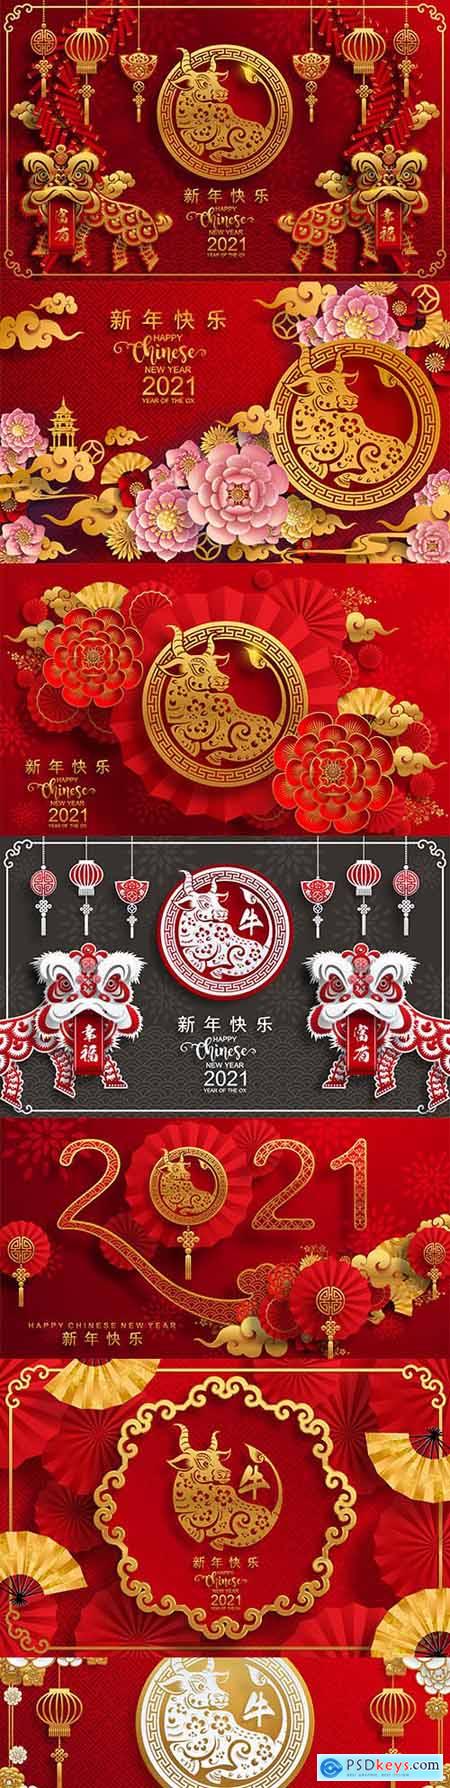 Metal Bull 2021 New Year on Chinese calendar